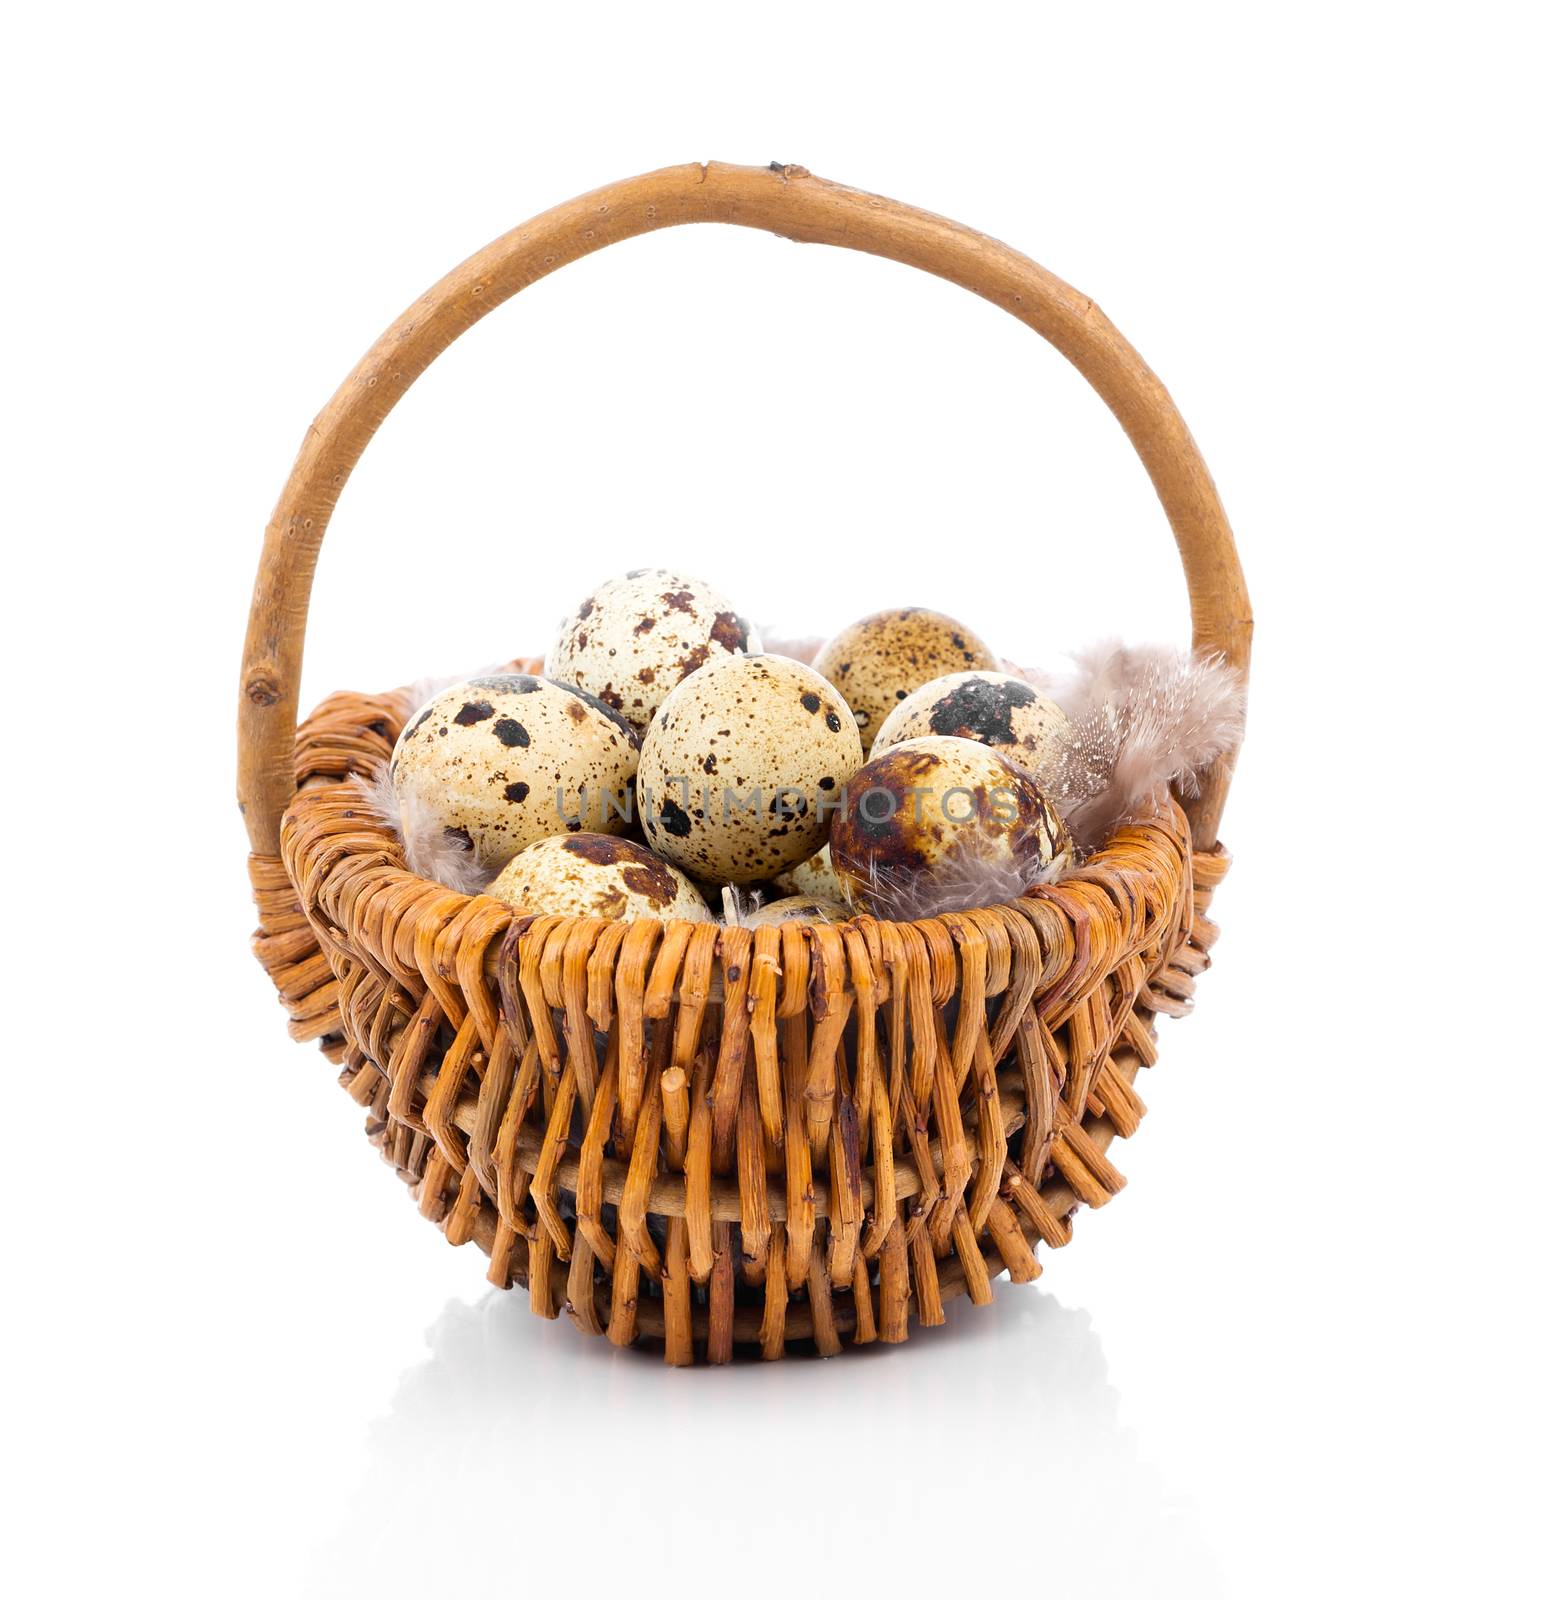 quail eggs in basket, on white background by motorolka